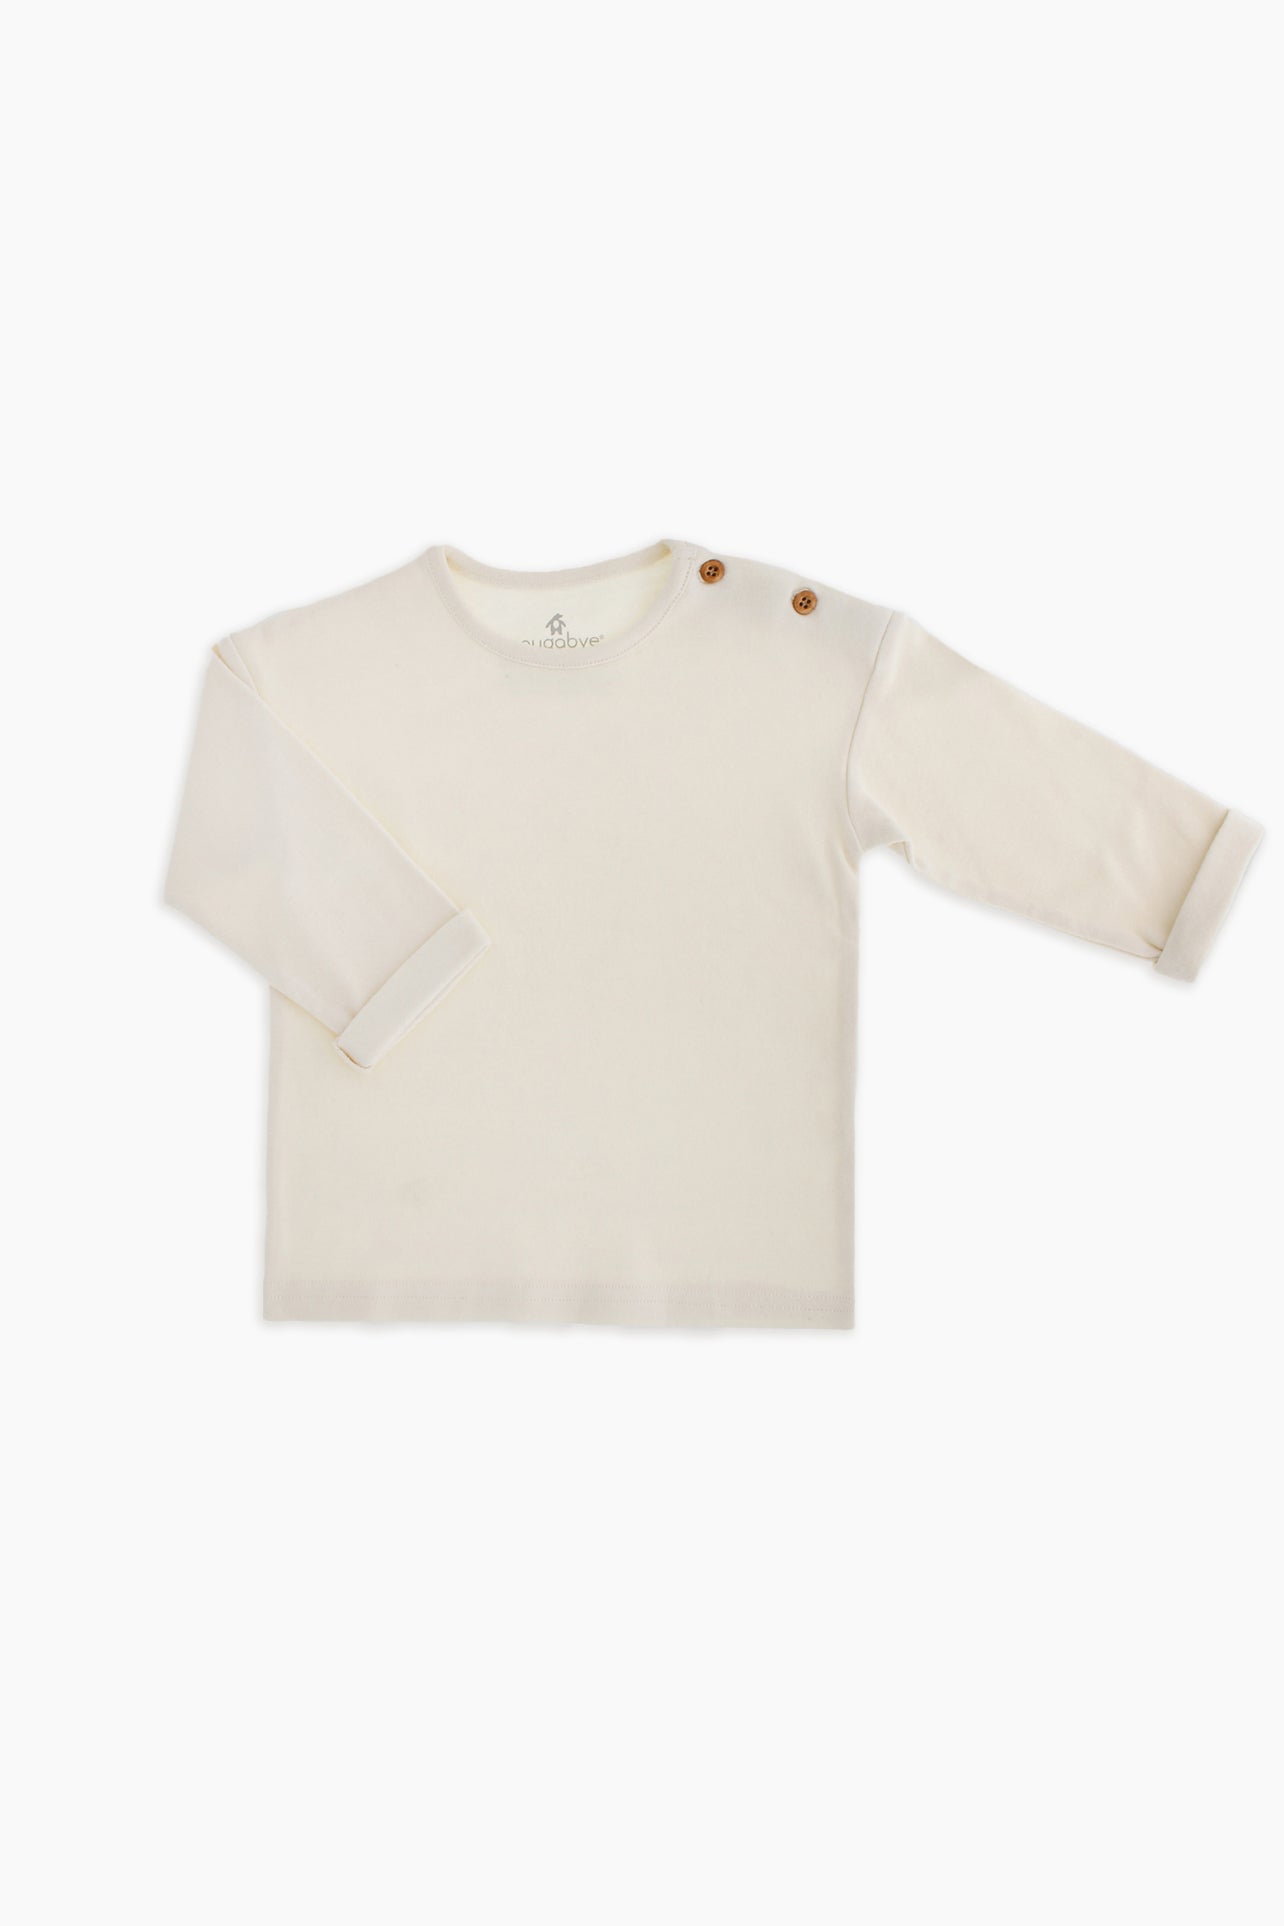 Snugabye Organic Cotton Toddler Long Sleeve T-Shirt